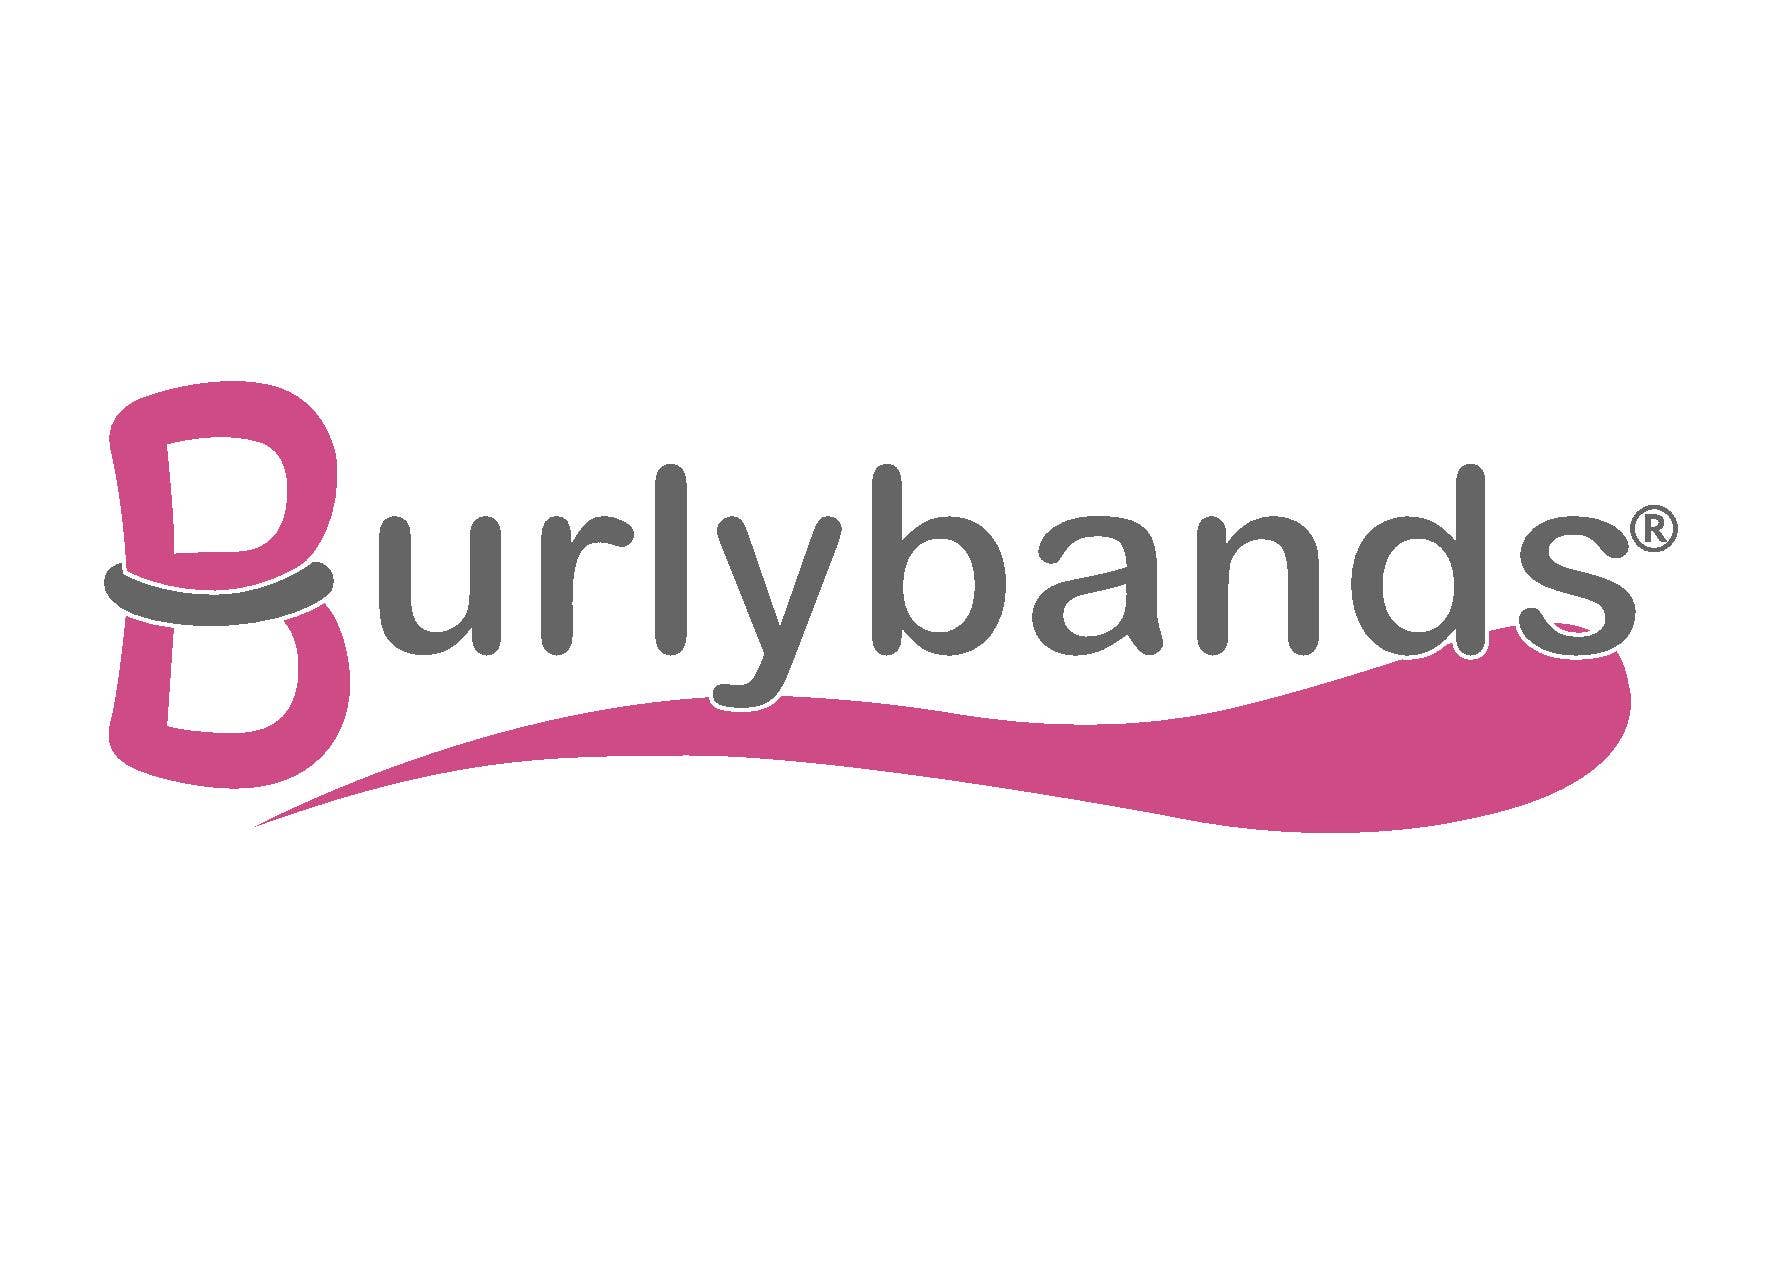 Burlybands - Elastic Non-Slip Athletic Headbands